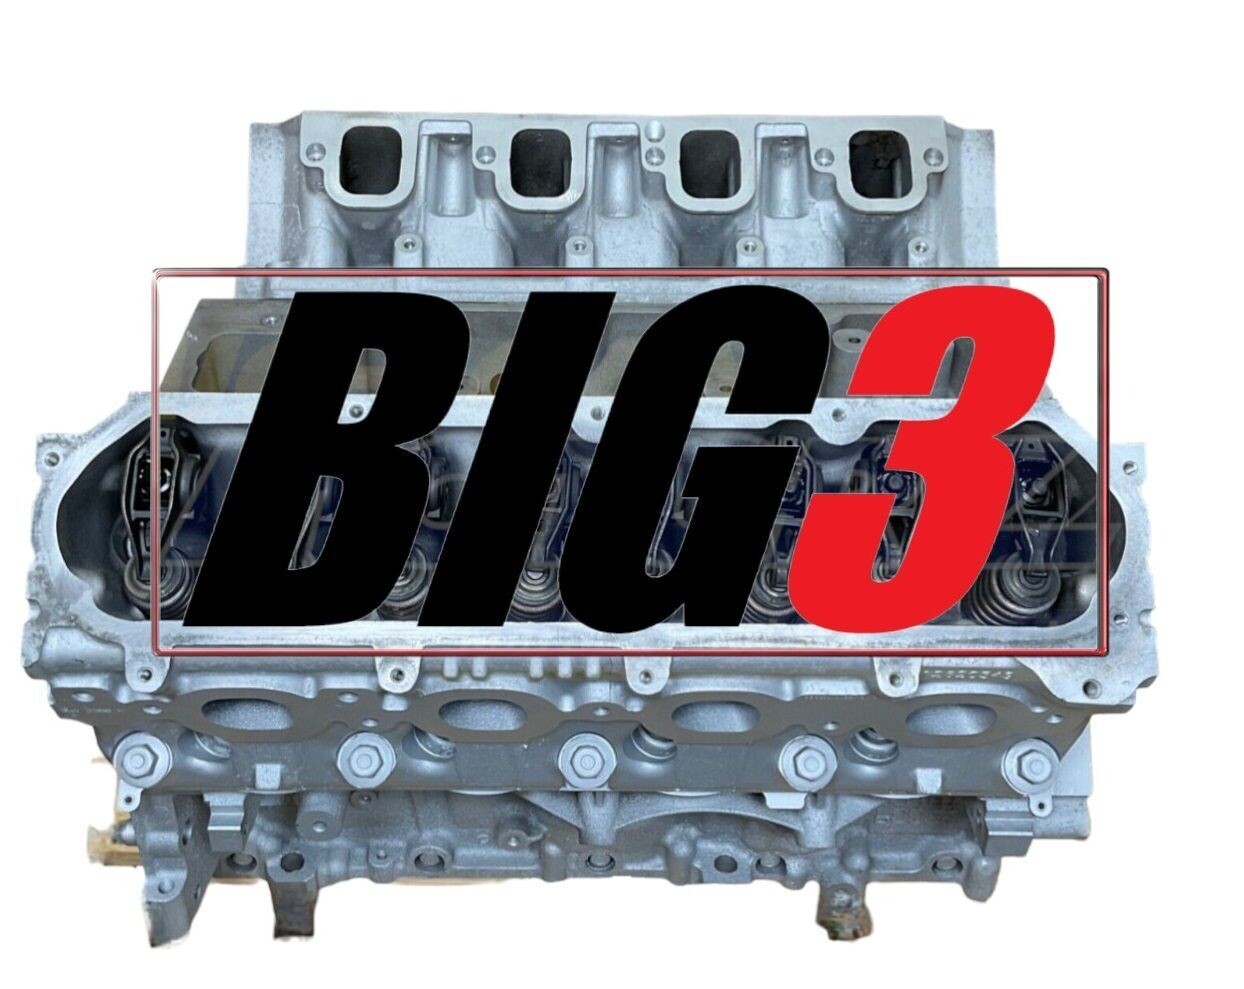 L86 GEN V ECOTEC3 6.2 ENGINE LONG BLOCK ASSEMBLY
2014 AND UP GM CHEVROLET AFM DELETED 4 YEAR PARTS WARRANTY